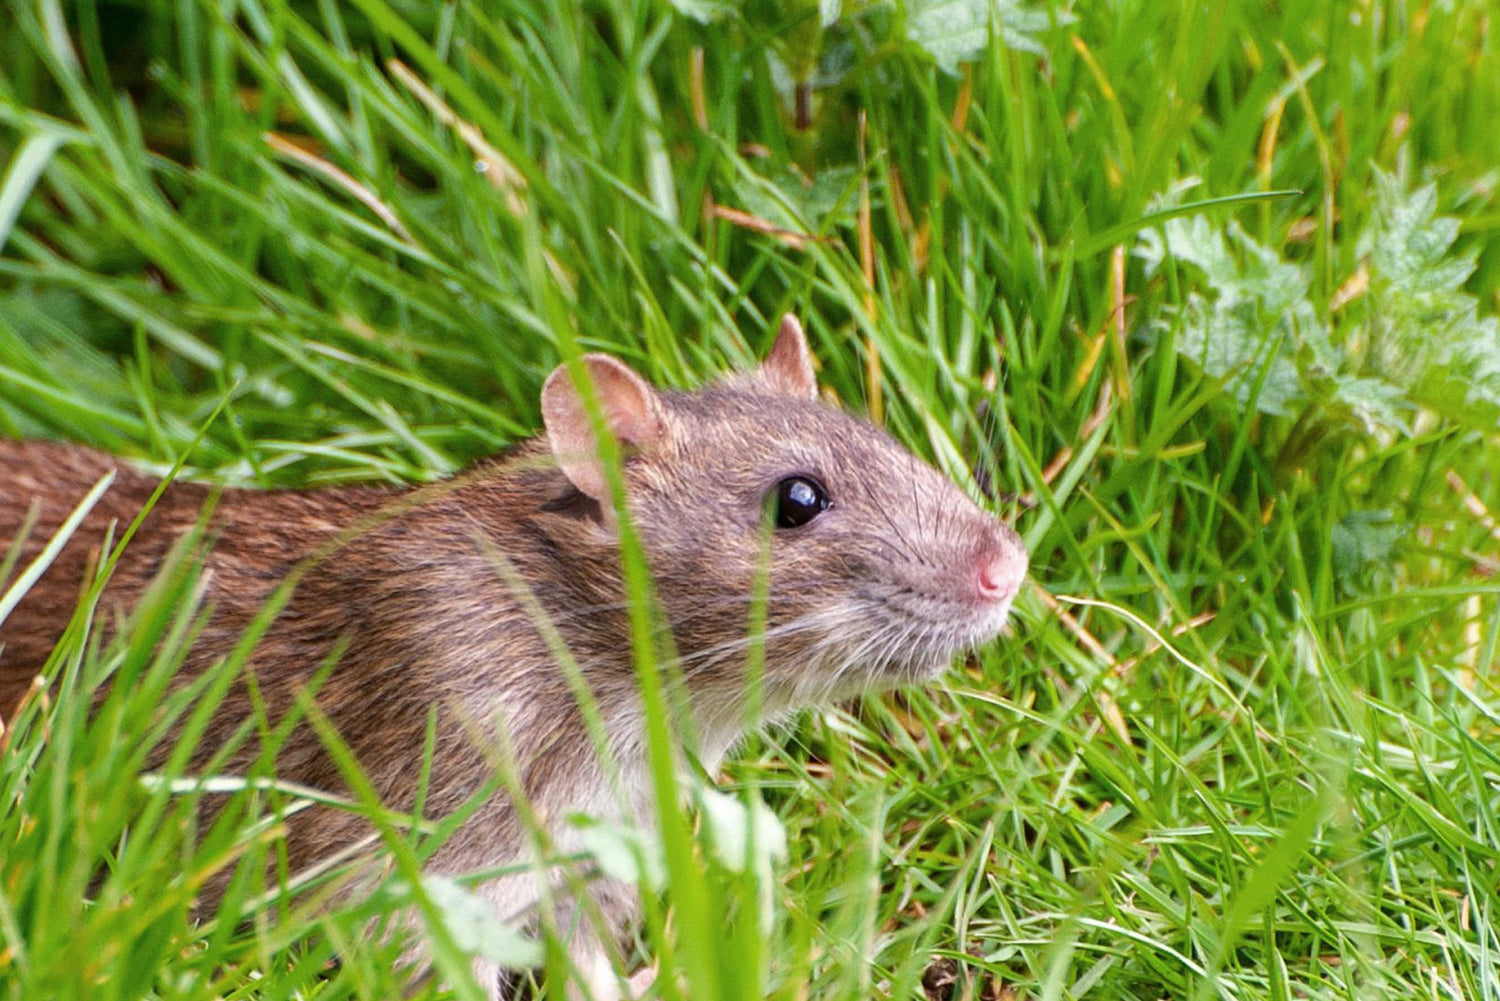 Understanding NZ’s Rats to Better Combat Them